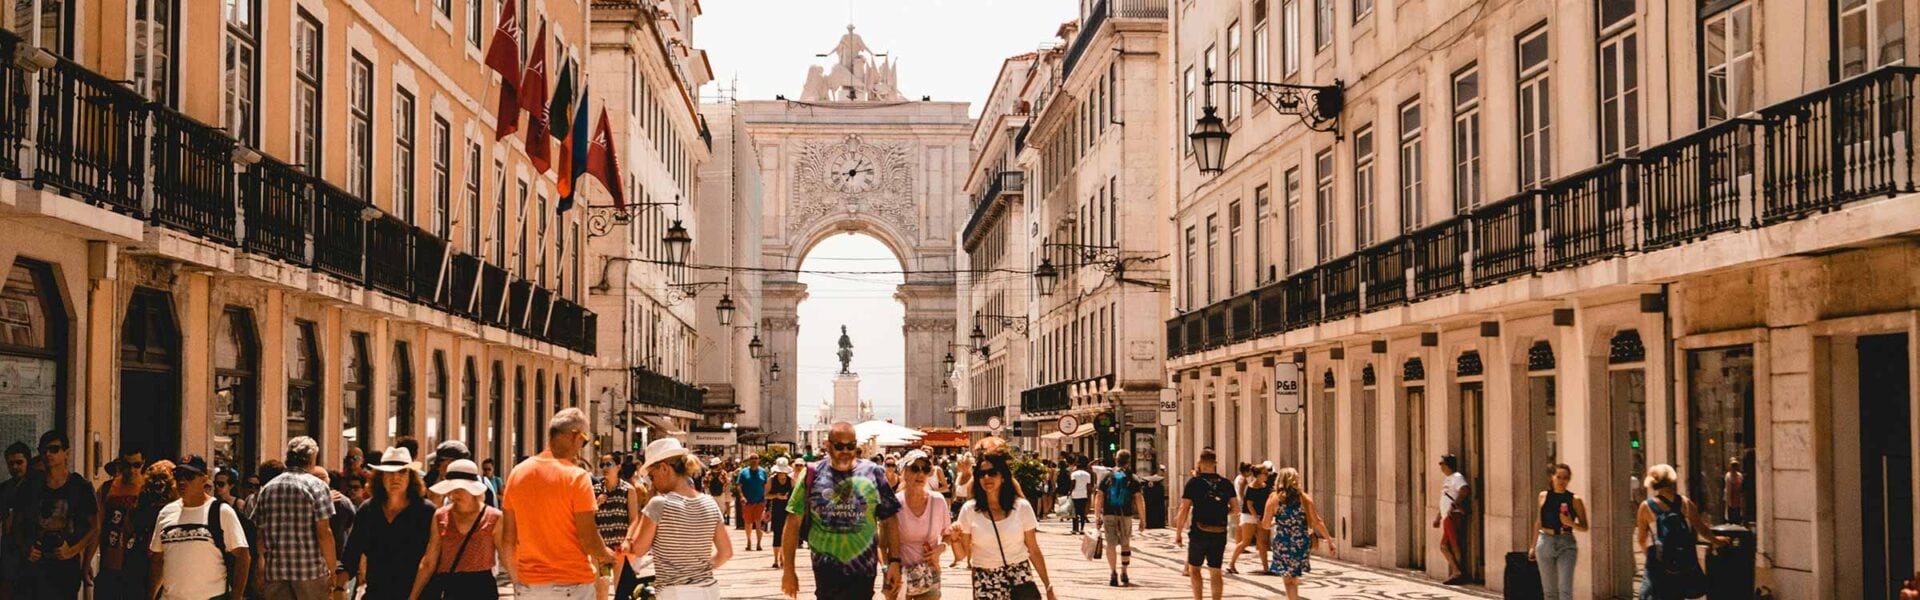 A crowd of people walking down a street in Lisbon, Portugal.